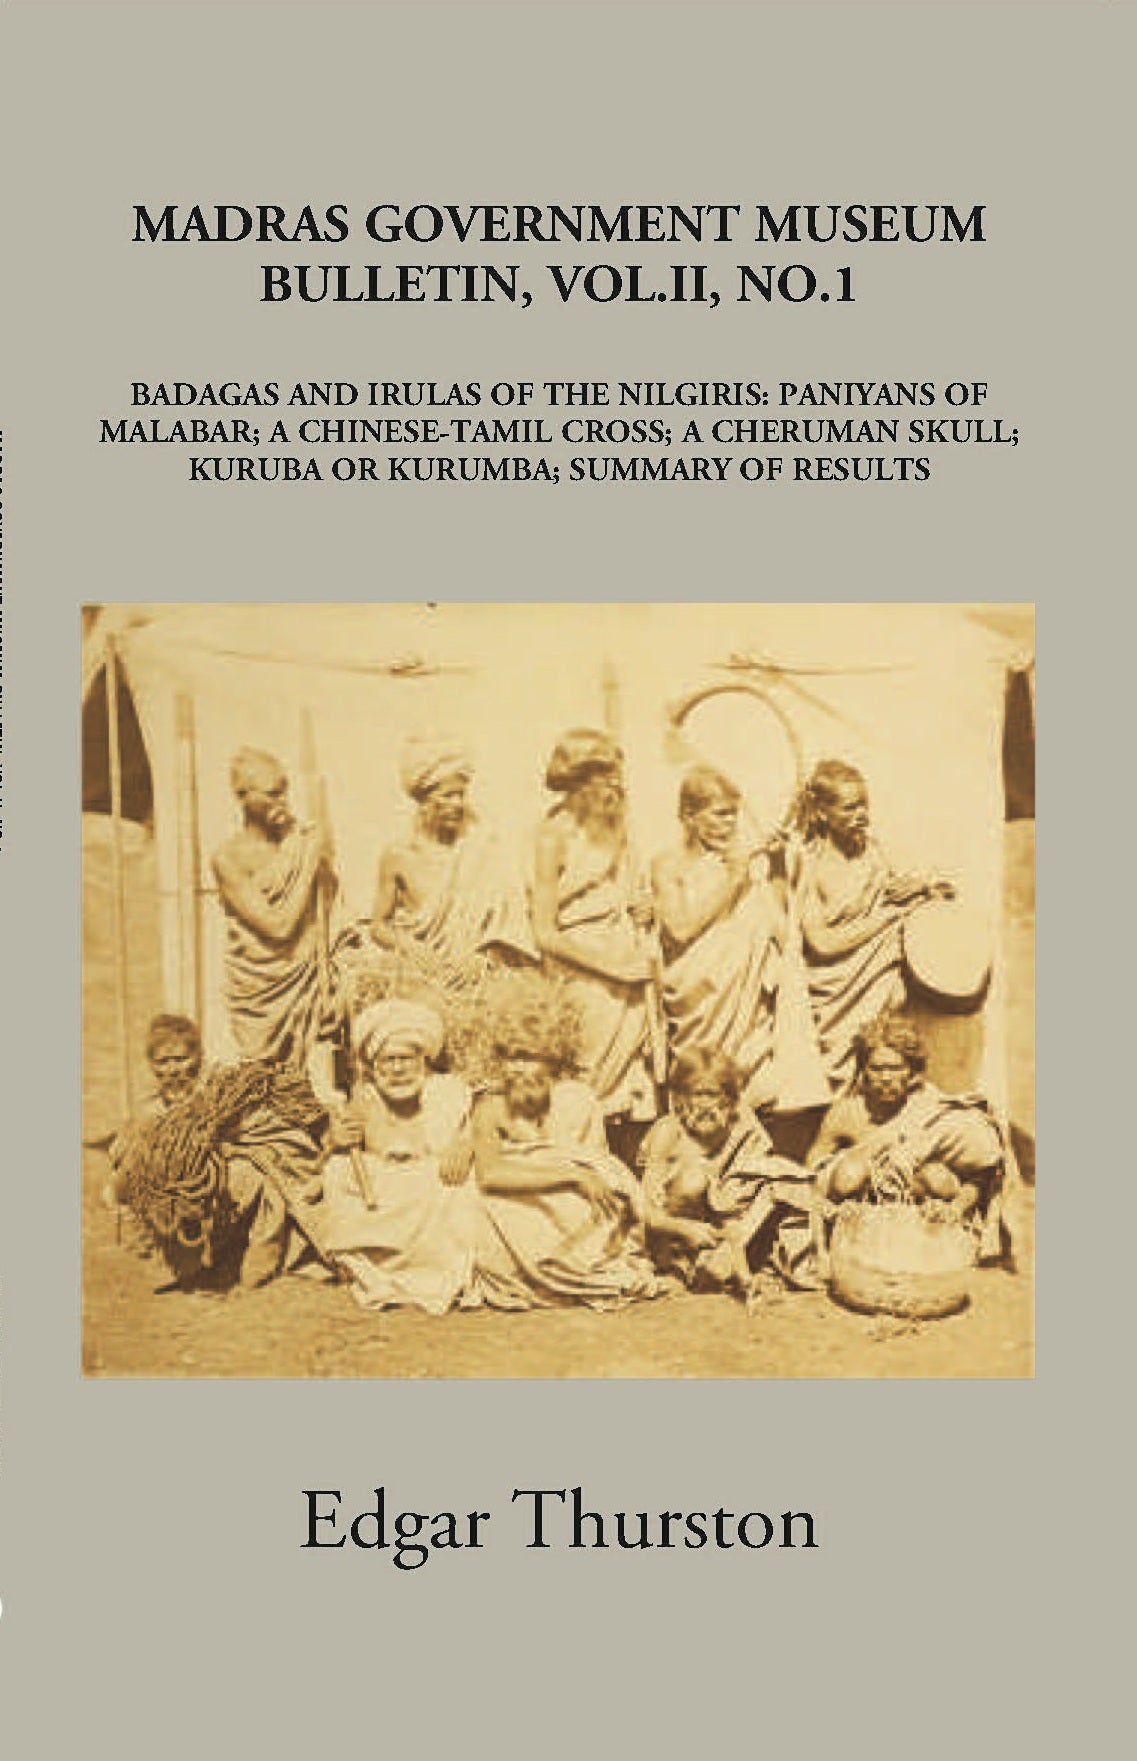 Madras Government Museum Bulletin, Anthropology Badagas And Irulas Of The Nilgiris; Paniyans Of Malabar; A Chinese-Tamil Cross; A Cheruman Skull; Kuruba Or Kurumba; Summary Of Results Volume Vol. 2nd, No. 1